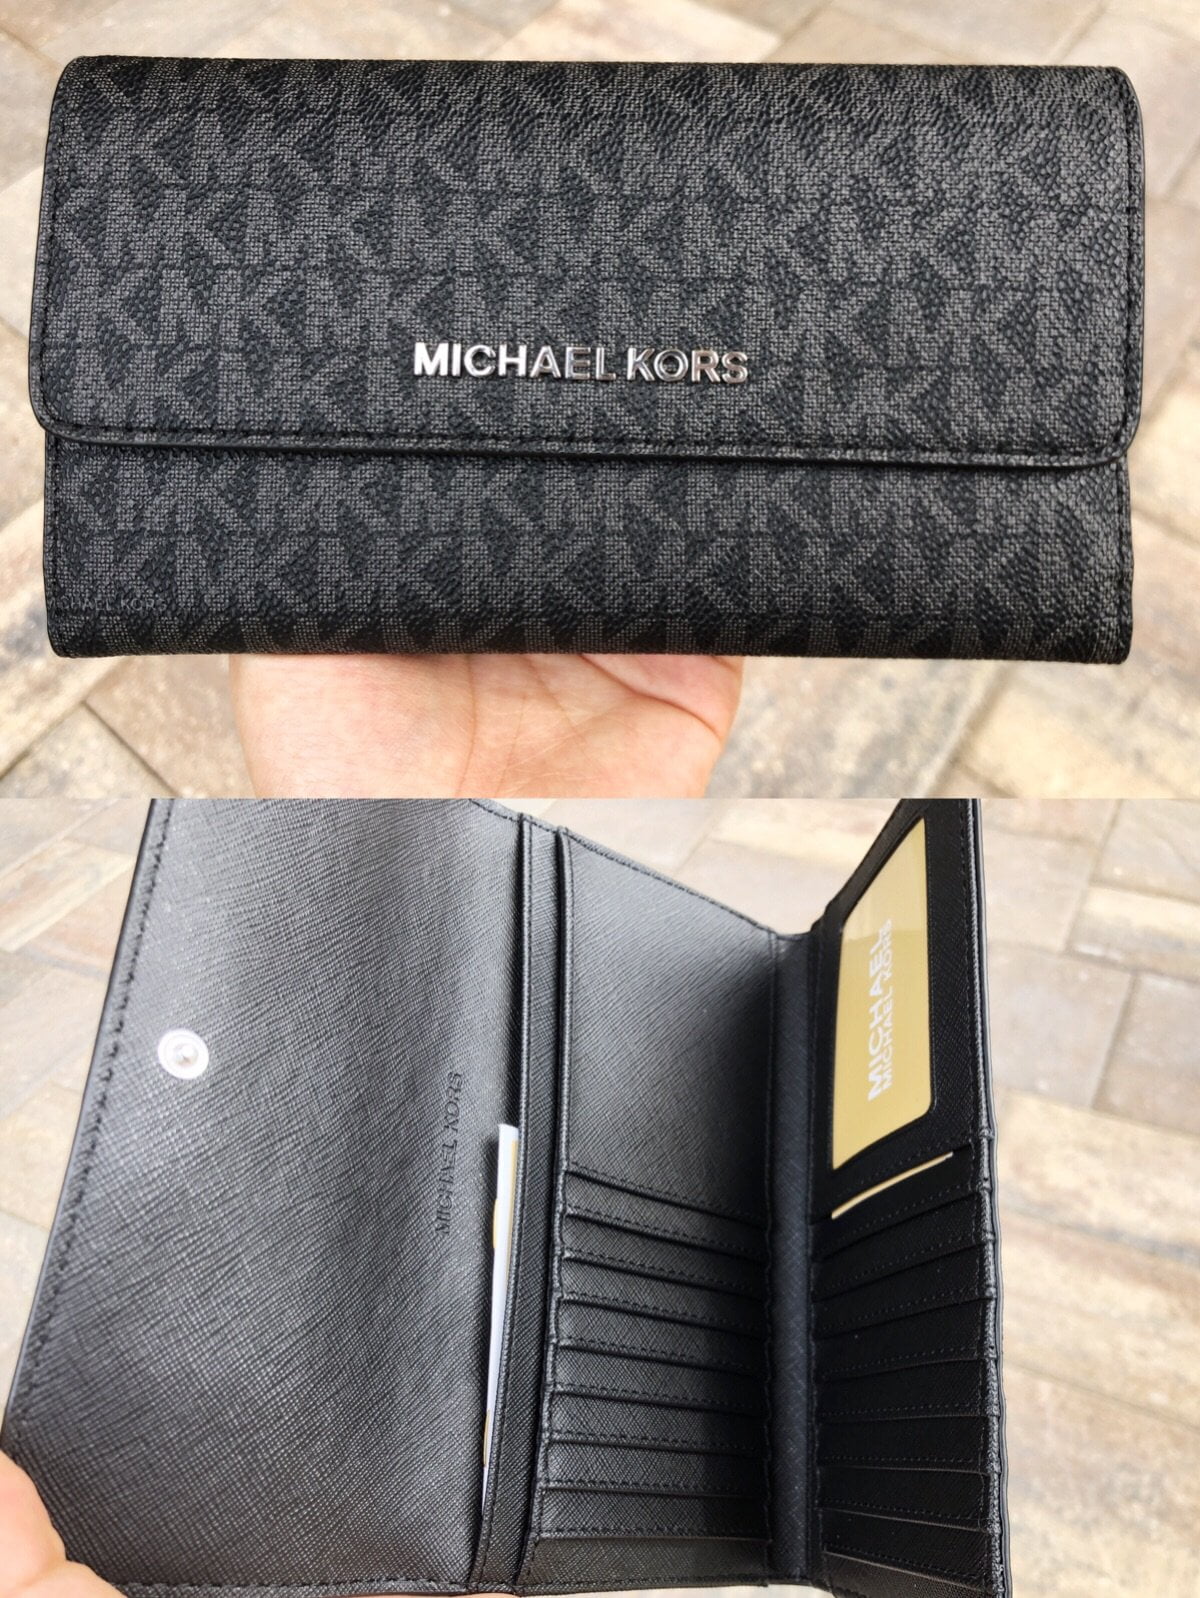 Michael Kors Jet Set Travel Large Trifold Wallet Black Signature